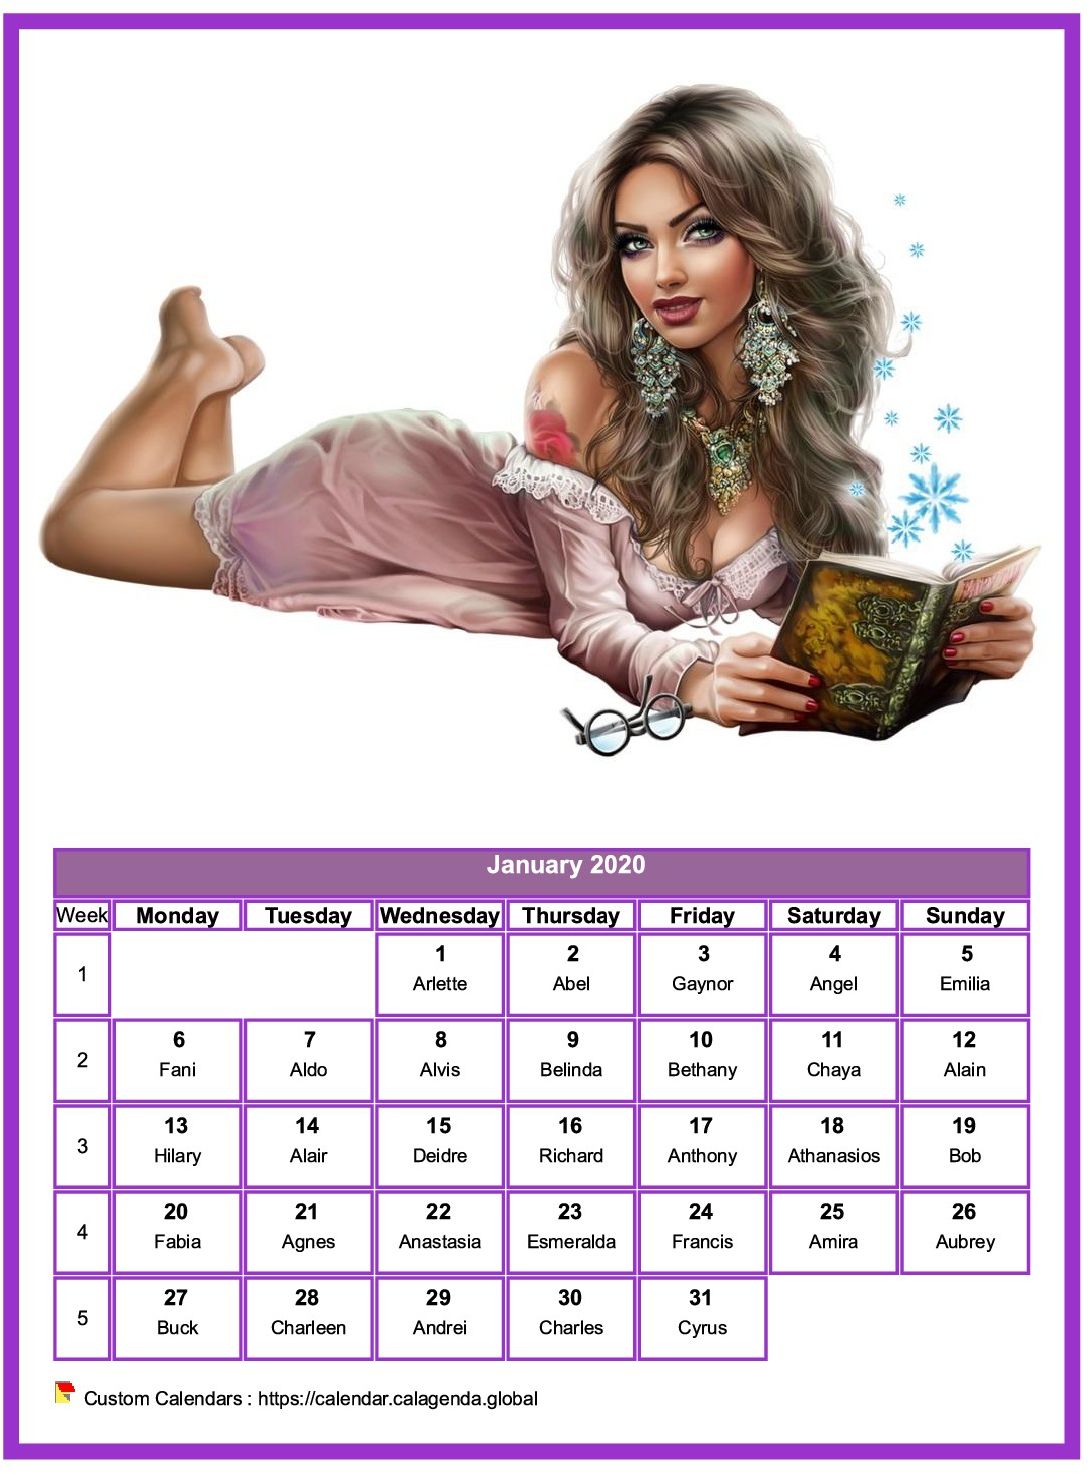 Calendar January 2020 women